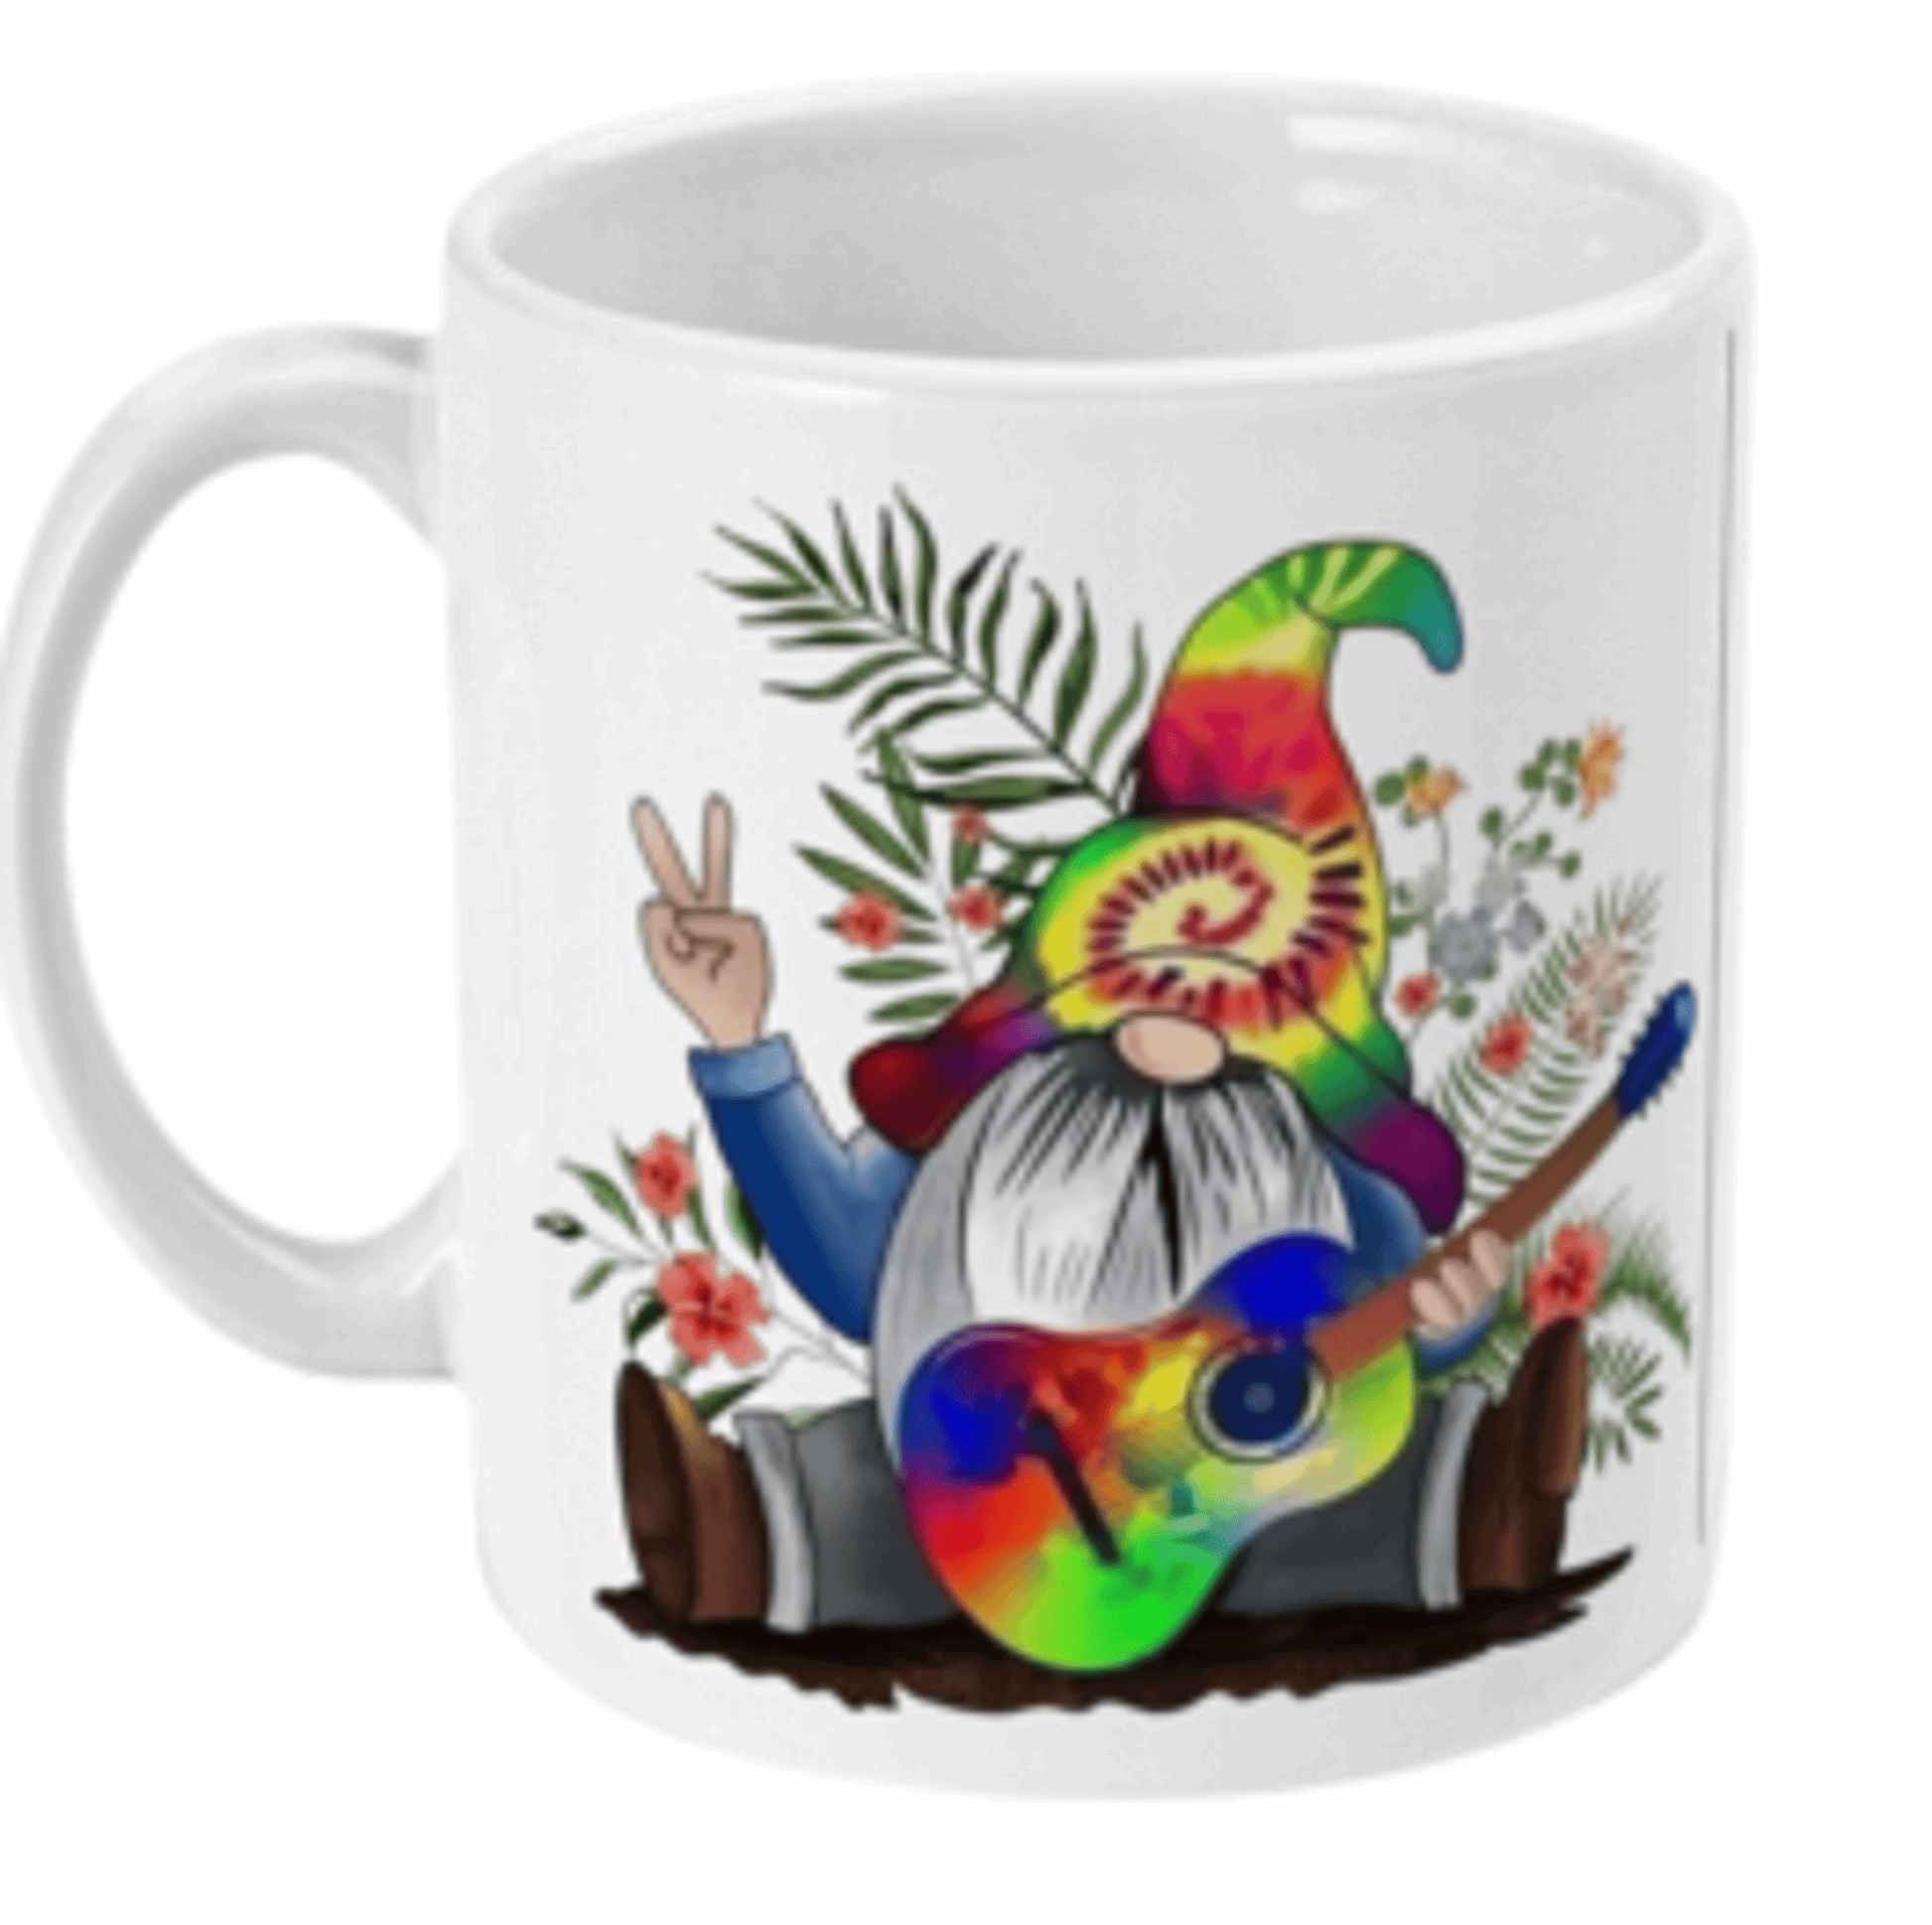  Colourful Tie Dye Hippy Gnome Coffee Mug by Free Spirit Accessories sold by Free Spirit Accessories